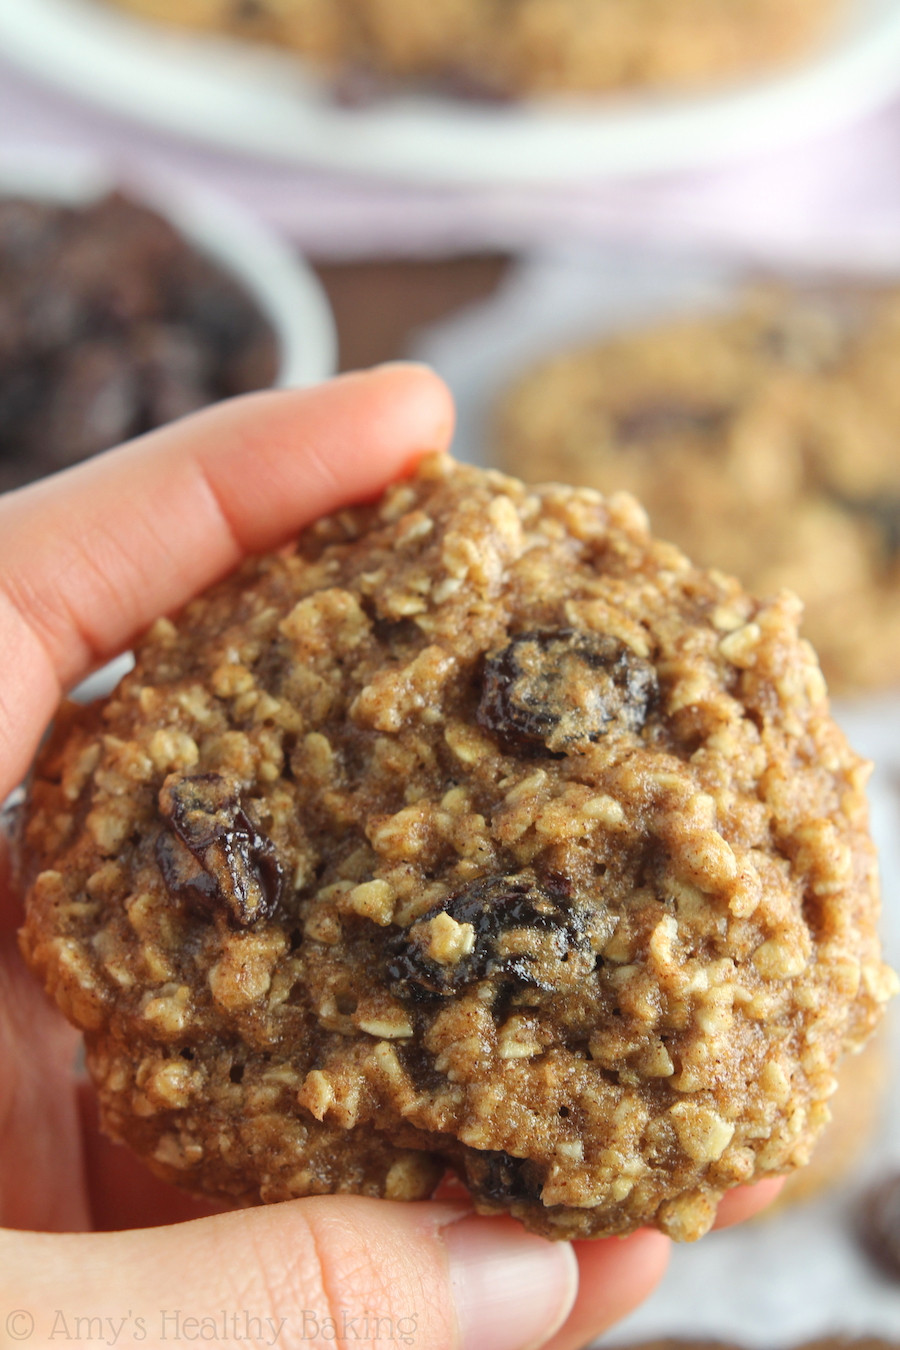 Oatmeal Raisin Cookies Recipe Healthy
 The Ultimate Healthy Soft & Chewy Oatmeal Raisin Cookies